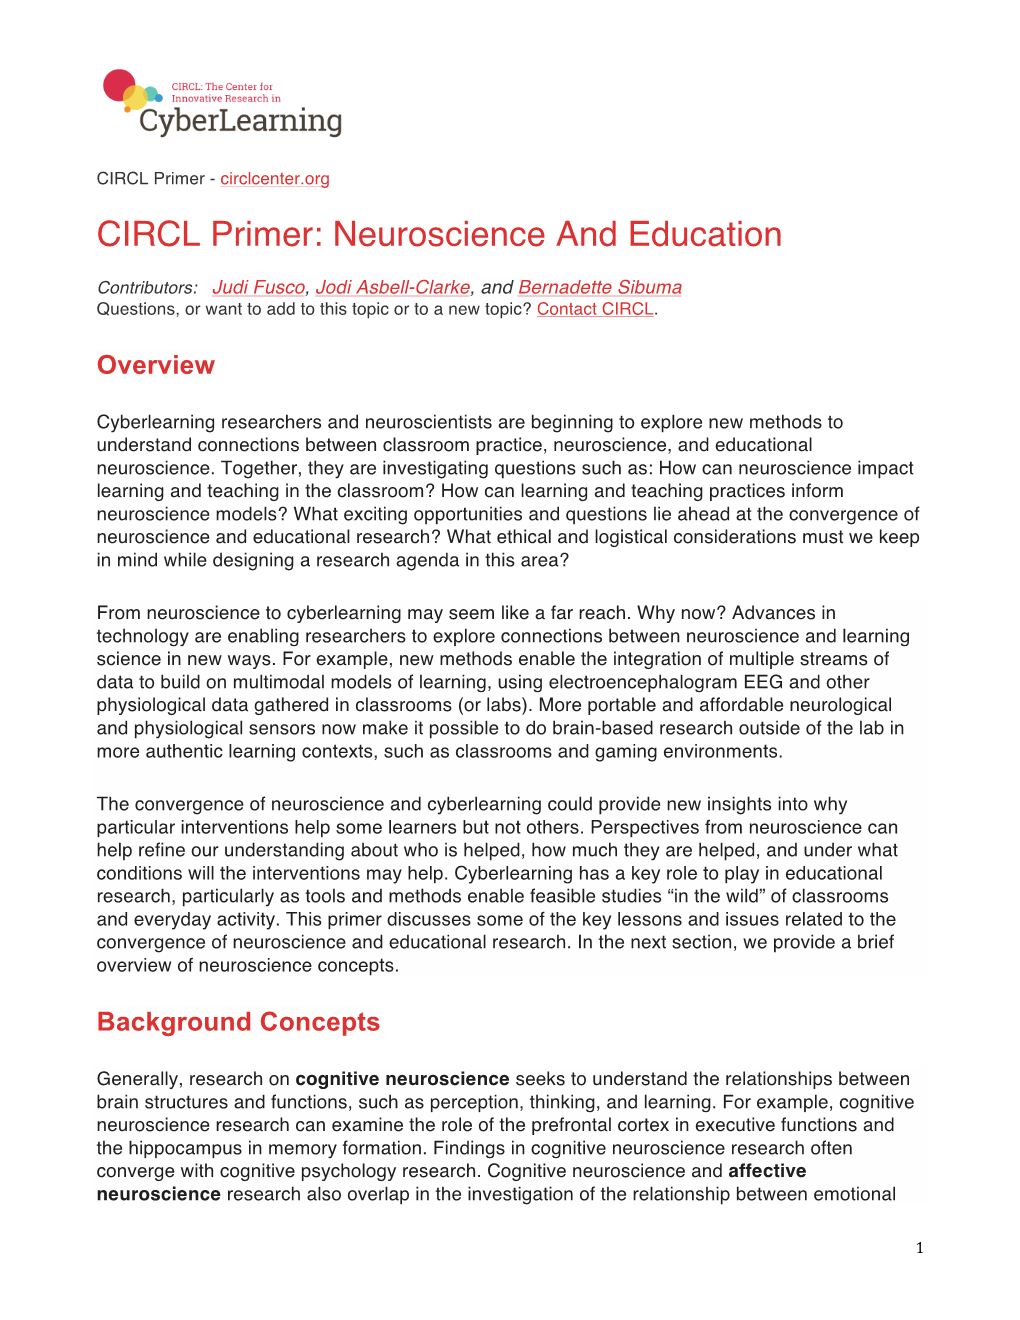 CIRCL Primer: Neuroscience and Education